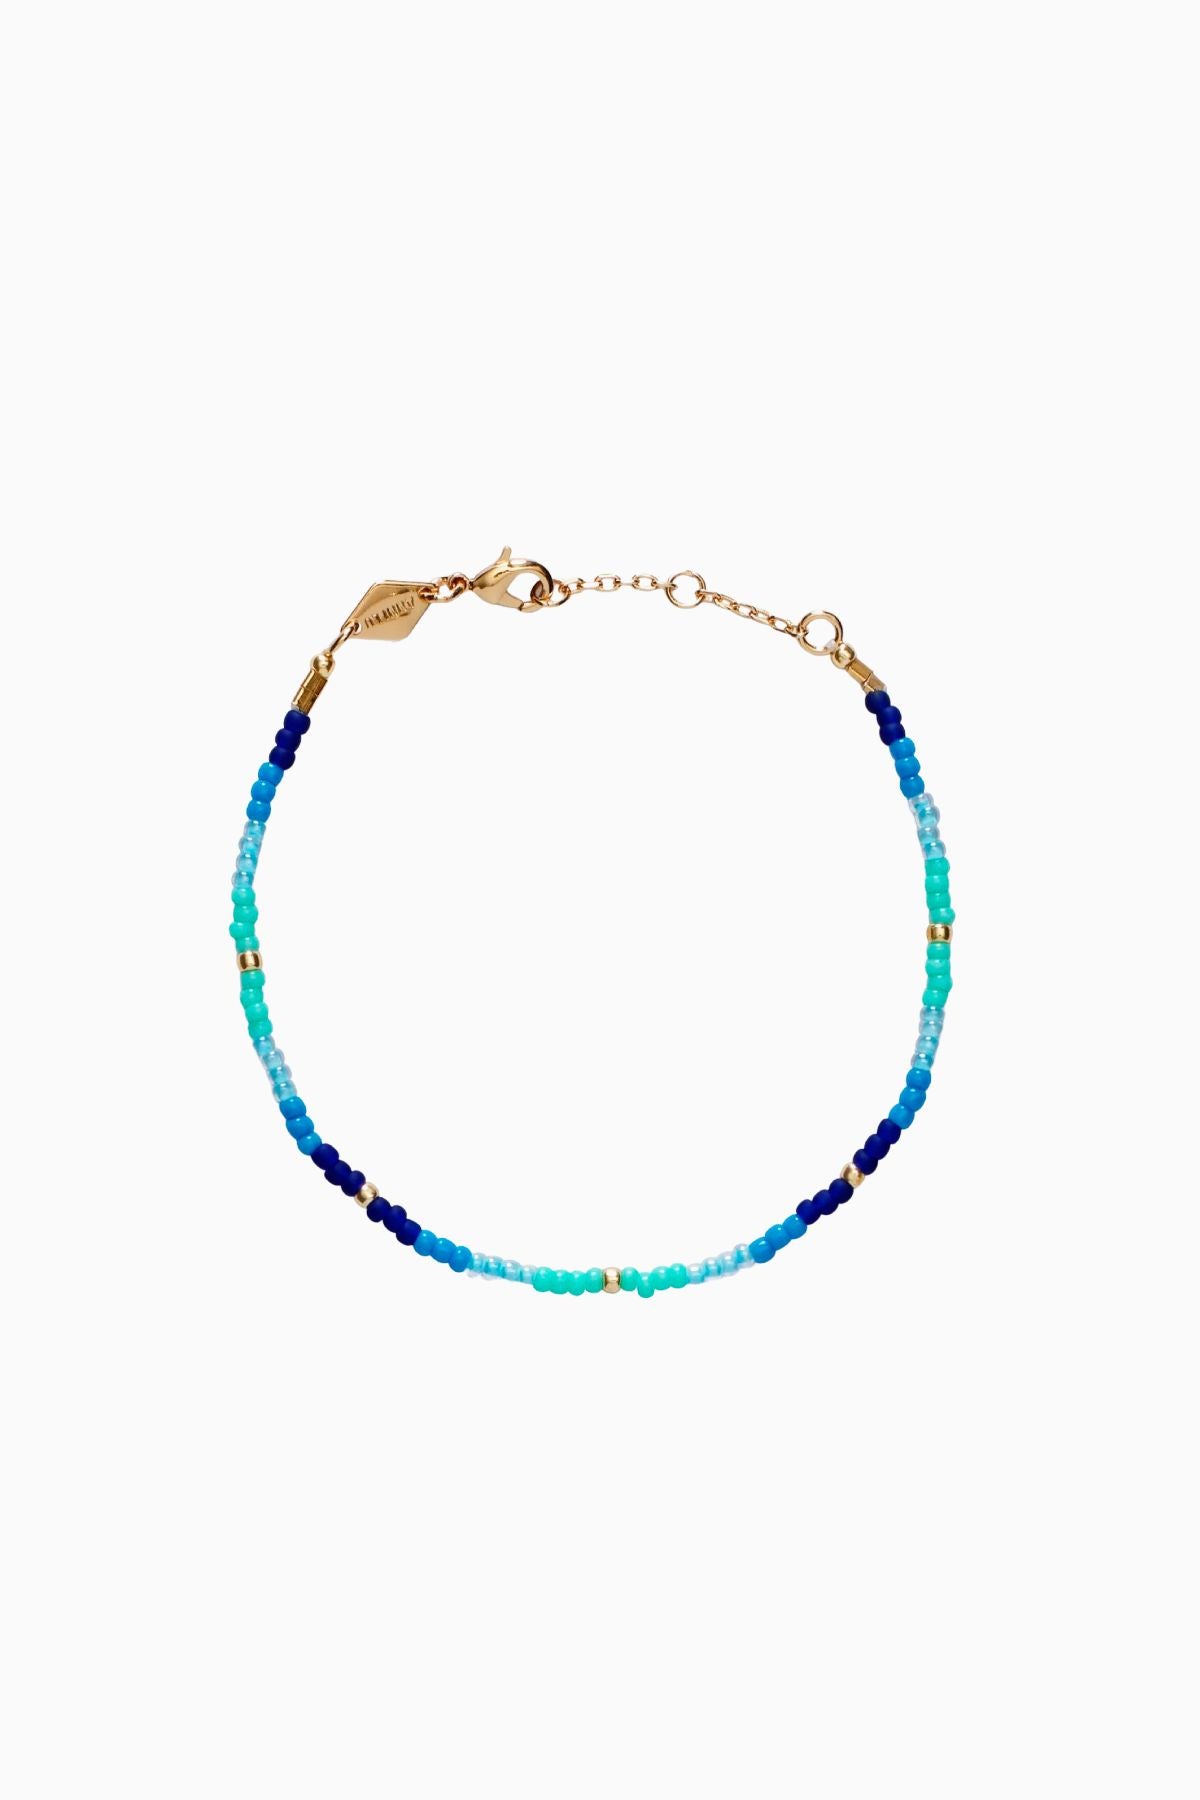 Anni Lu Tie Dye Bracelet - Pacific Blue